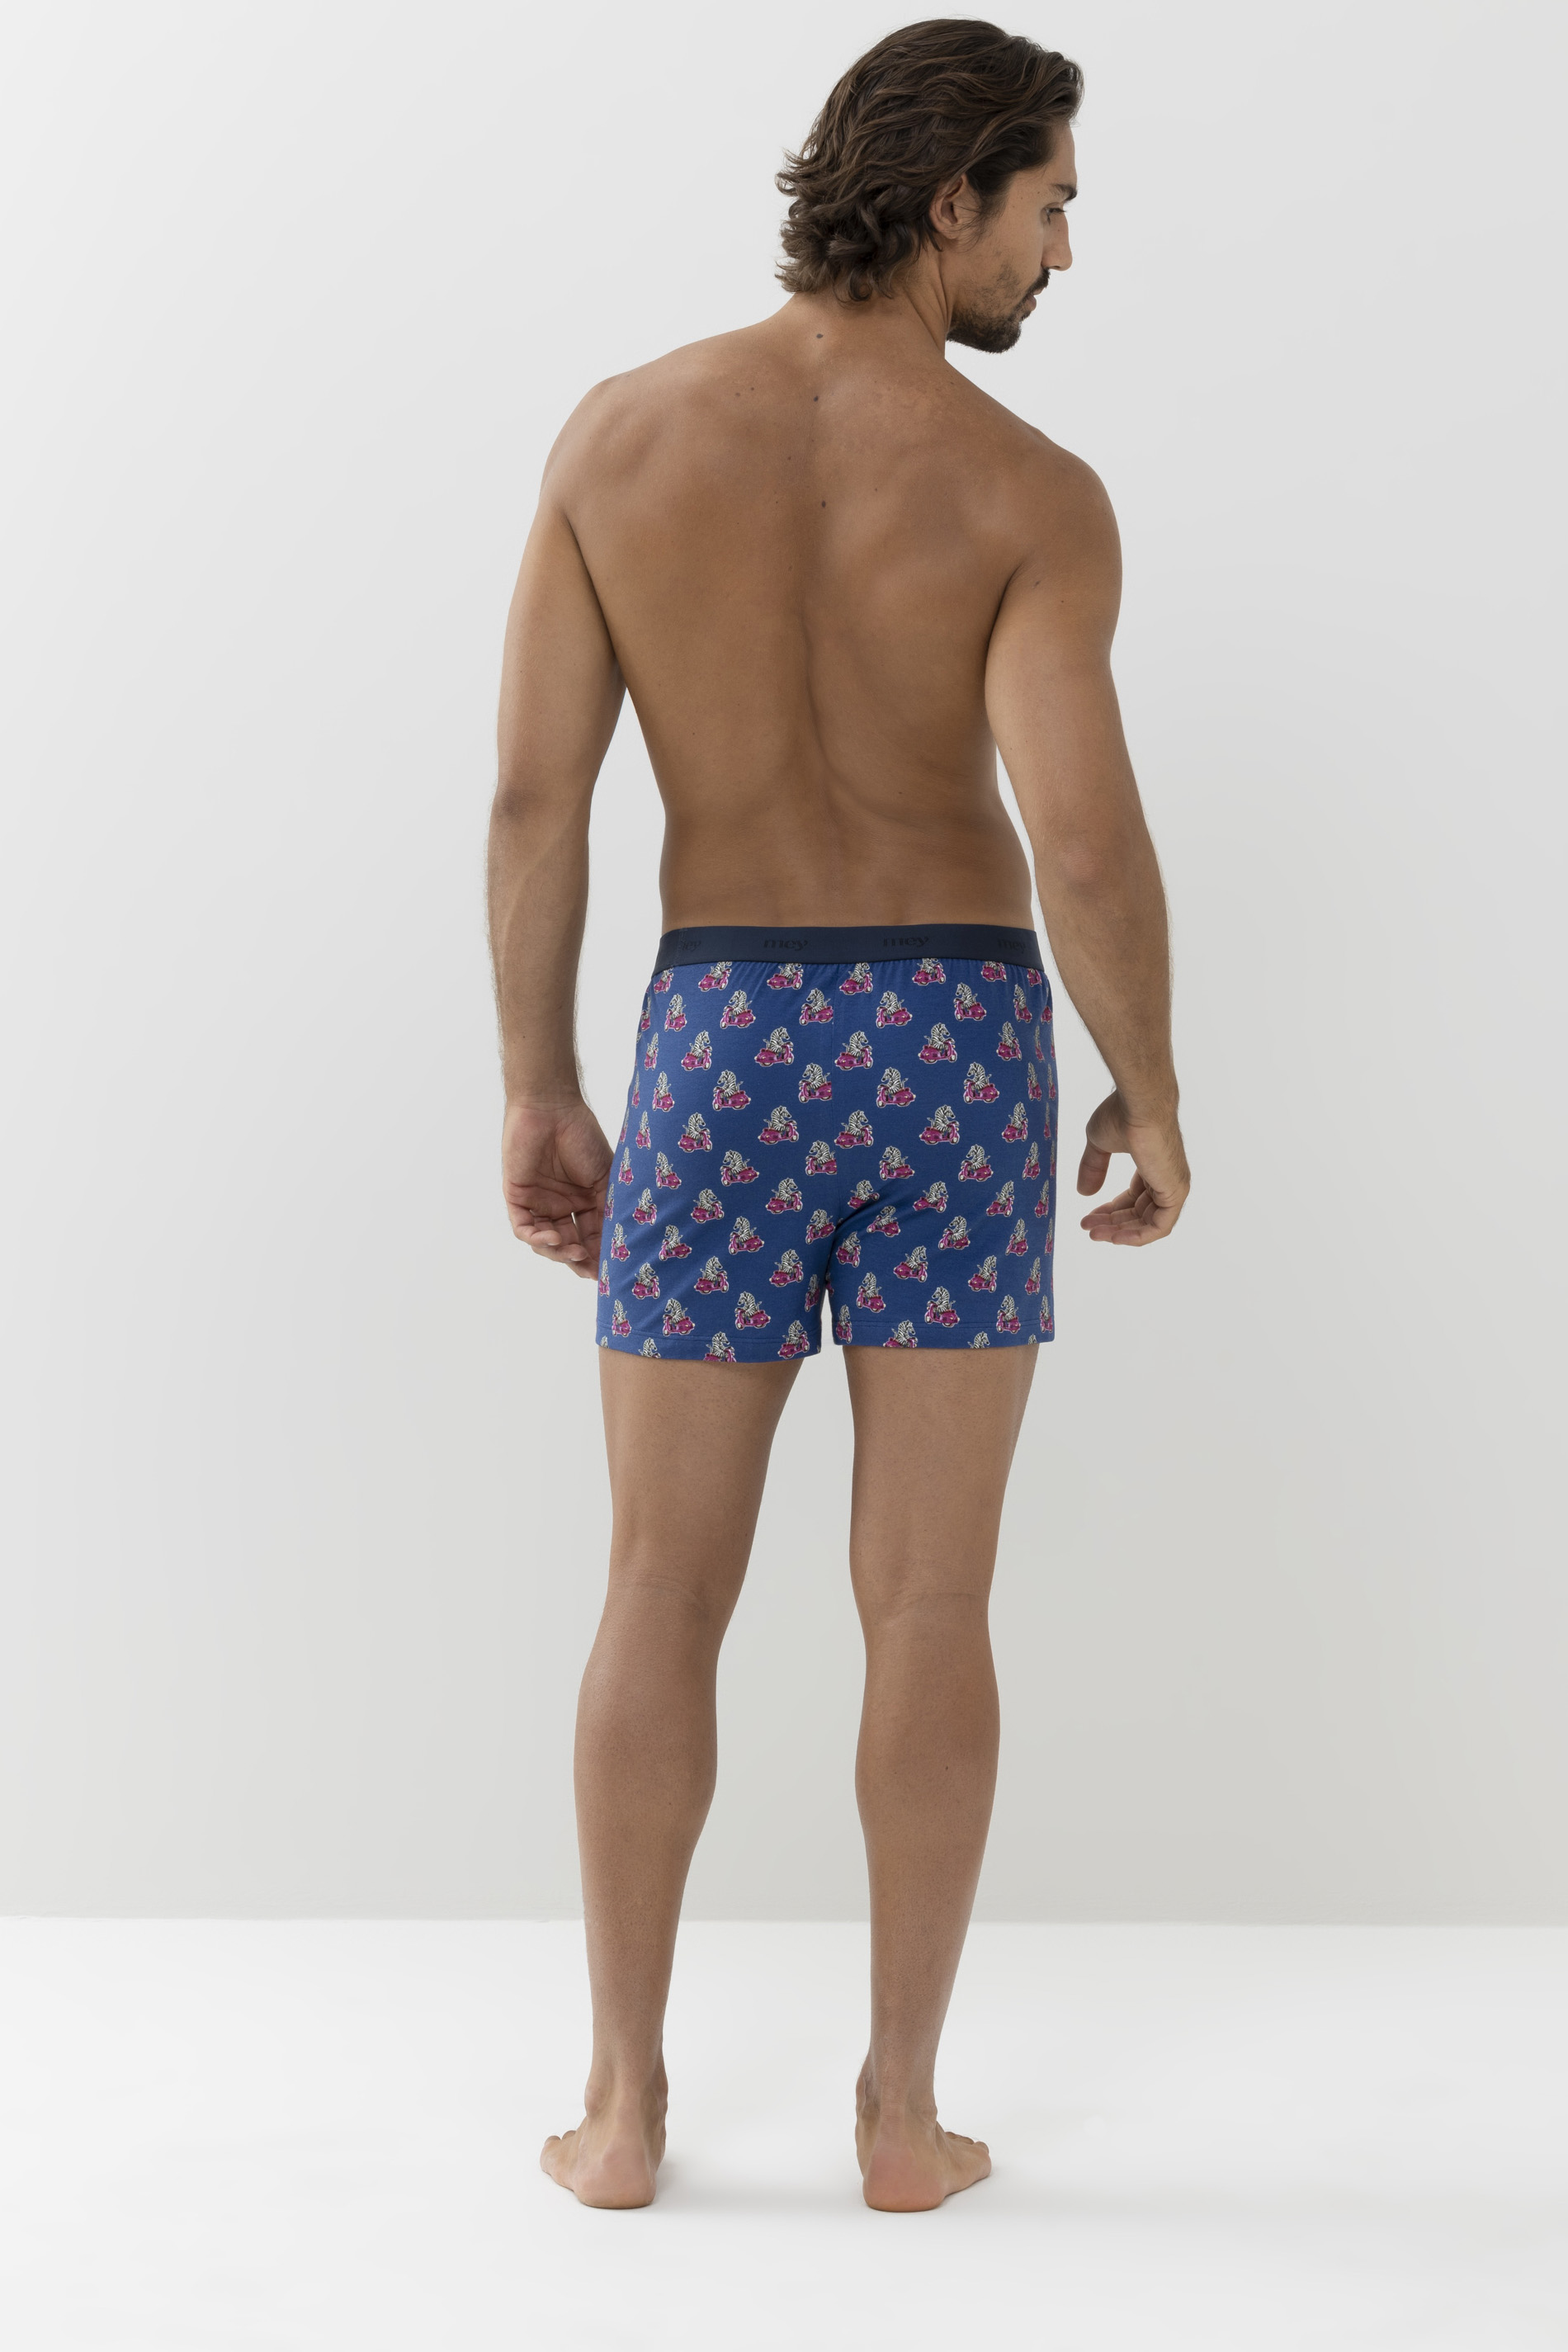 Boxer shorts Serie RE:THINK Zebra Rear View | mey®